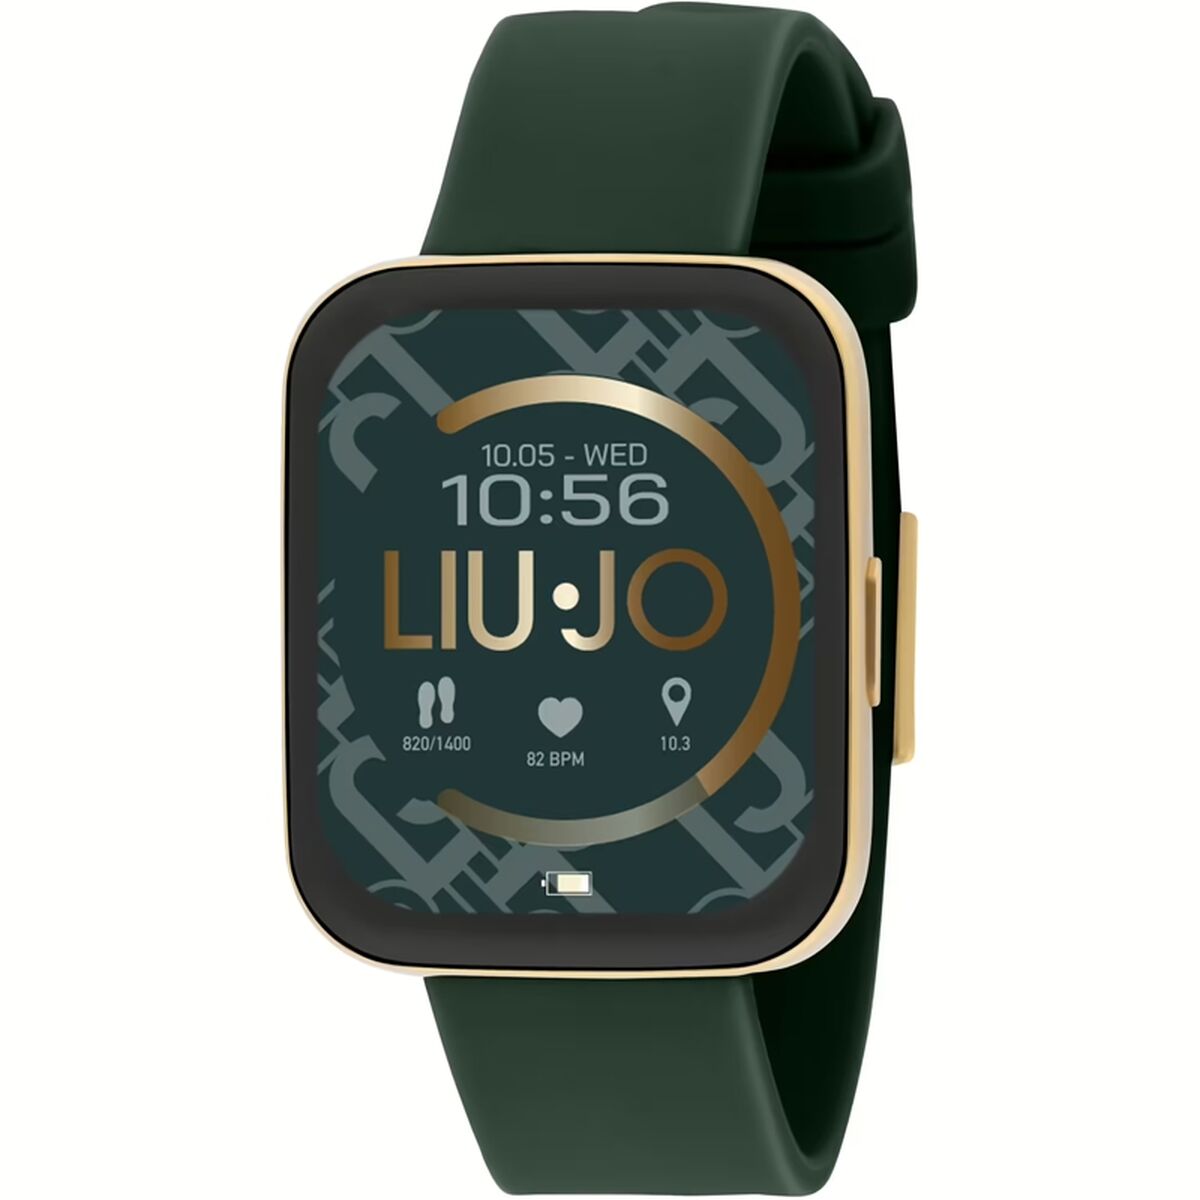 Kaufe Smartwatch LIU JO SWLJ095 bei AWK Flagship um € 162.00